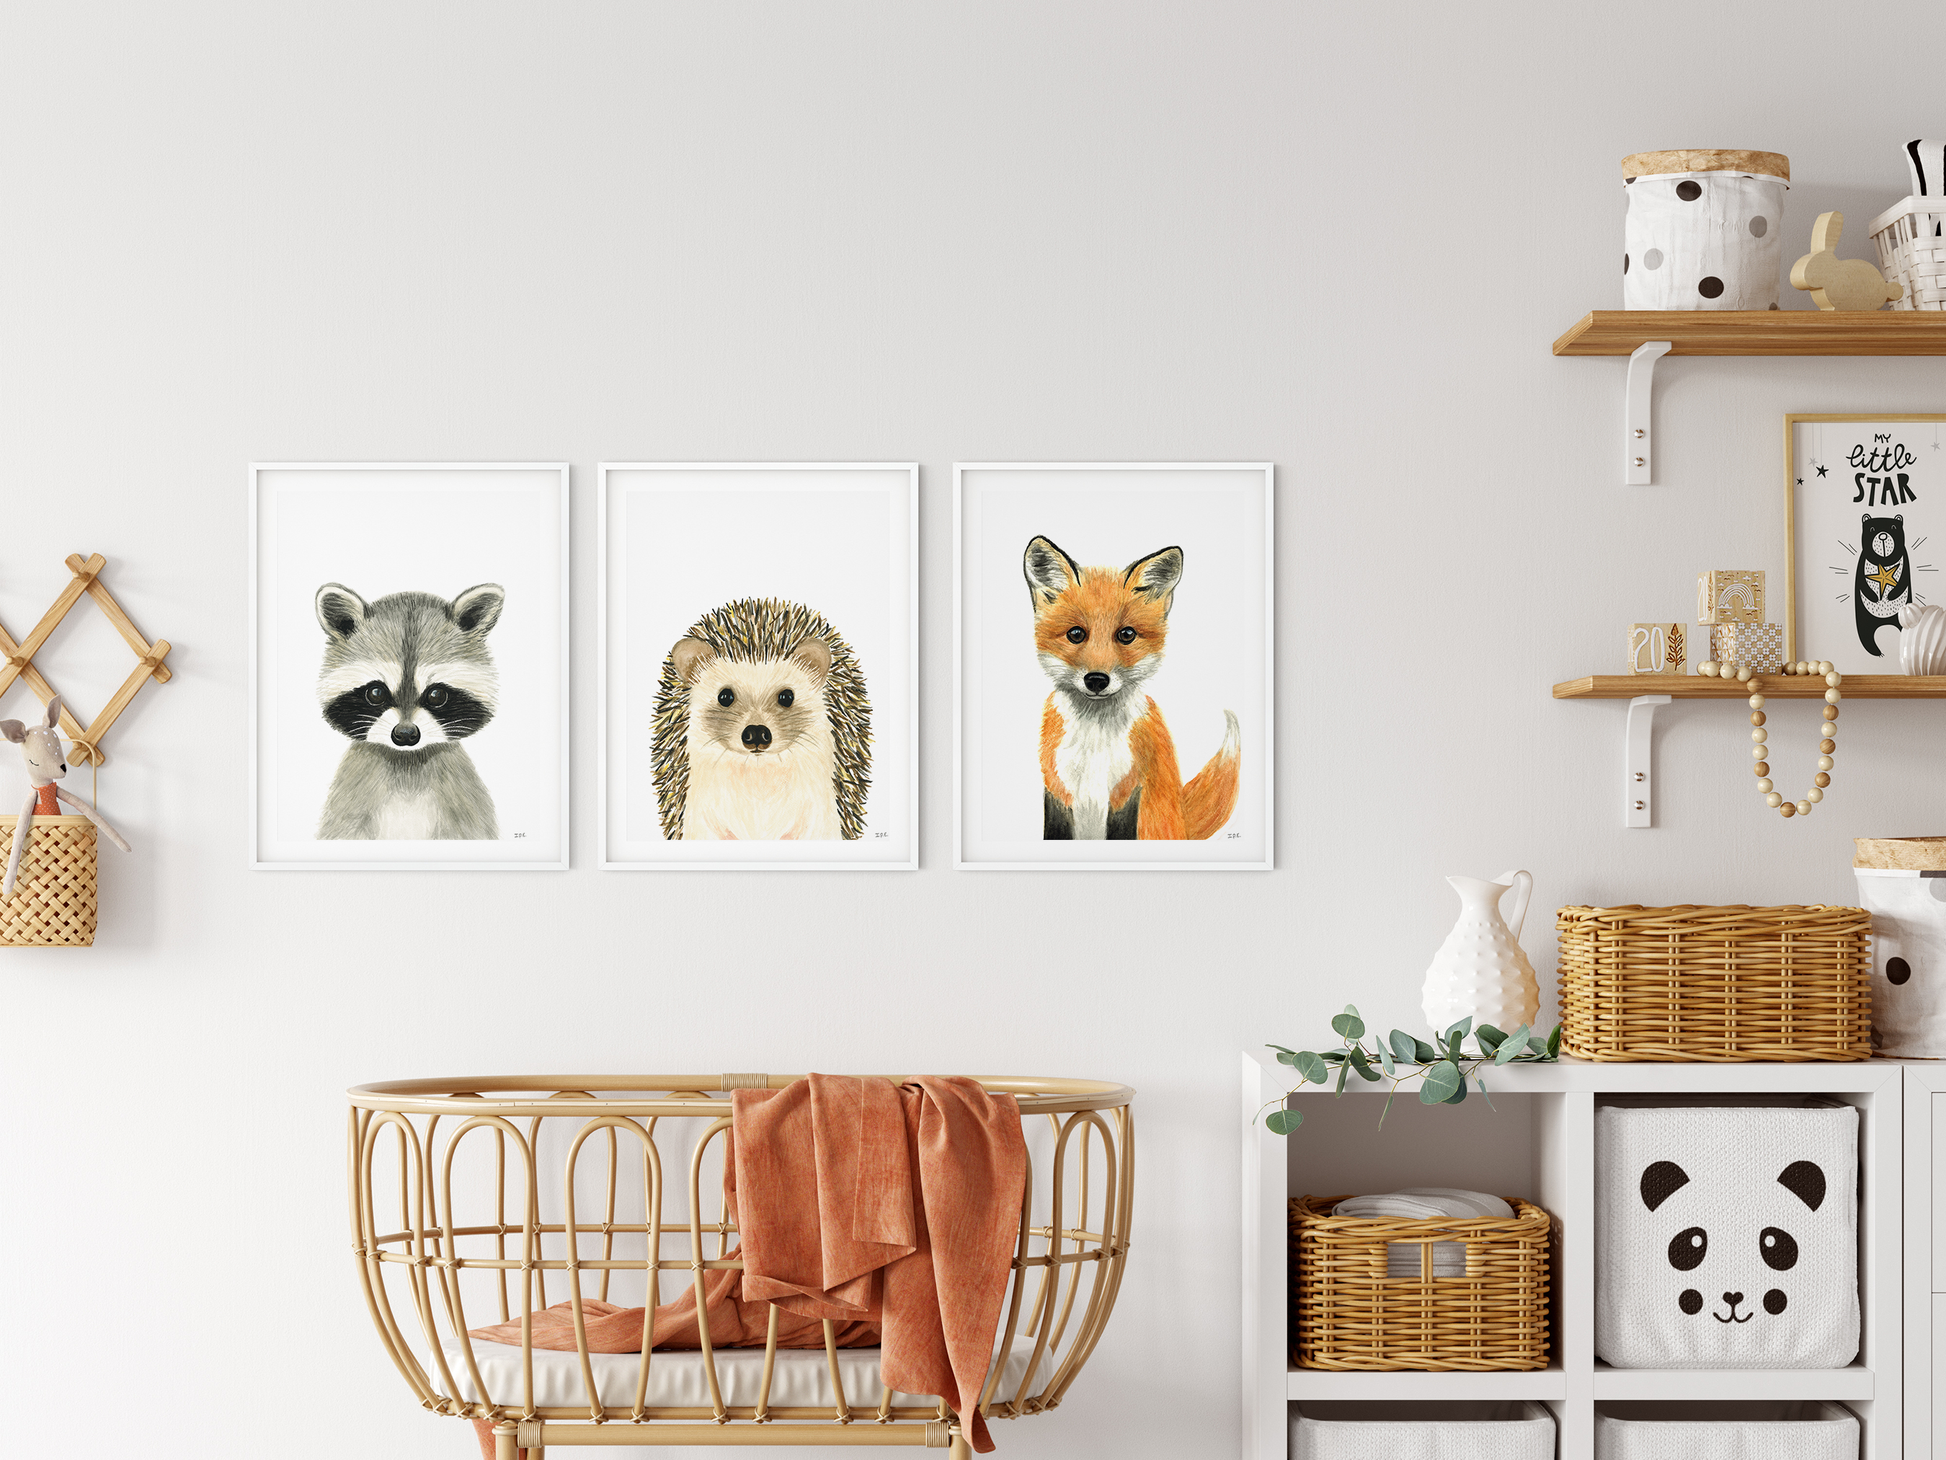 Set of 3 wall art animal prints as decor in a nursery: racoon, hedgehog, fox